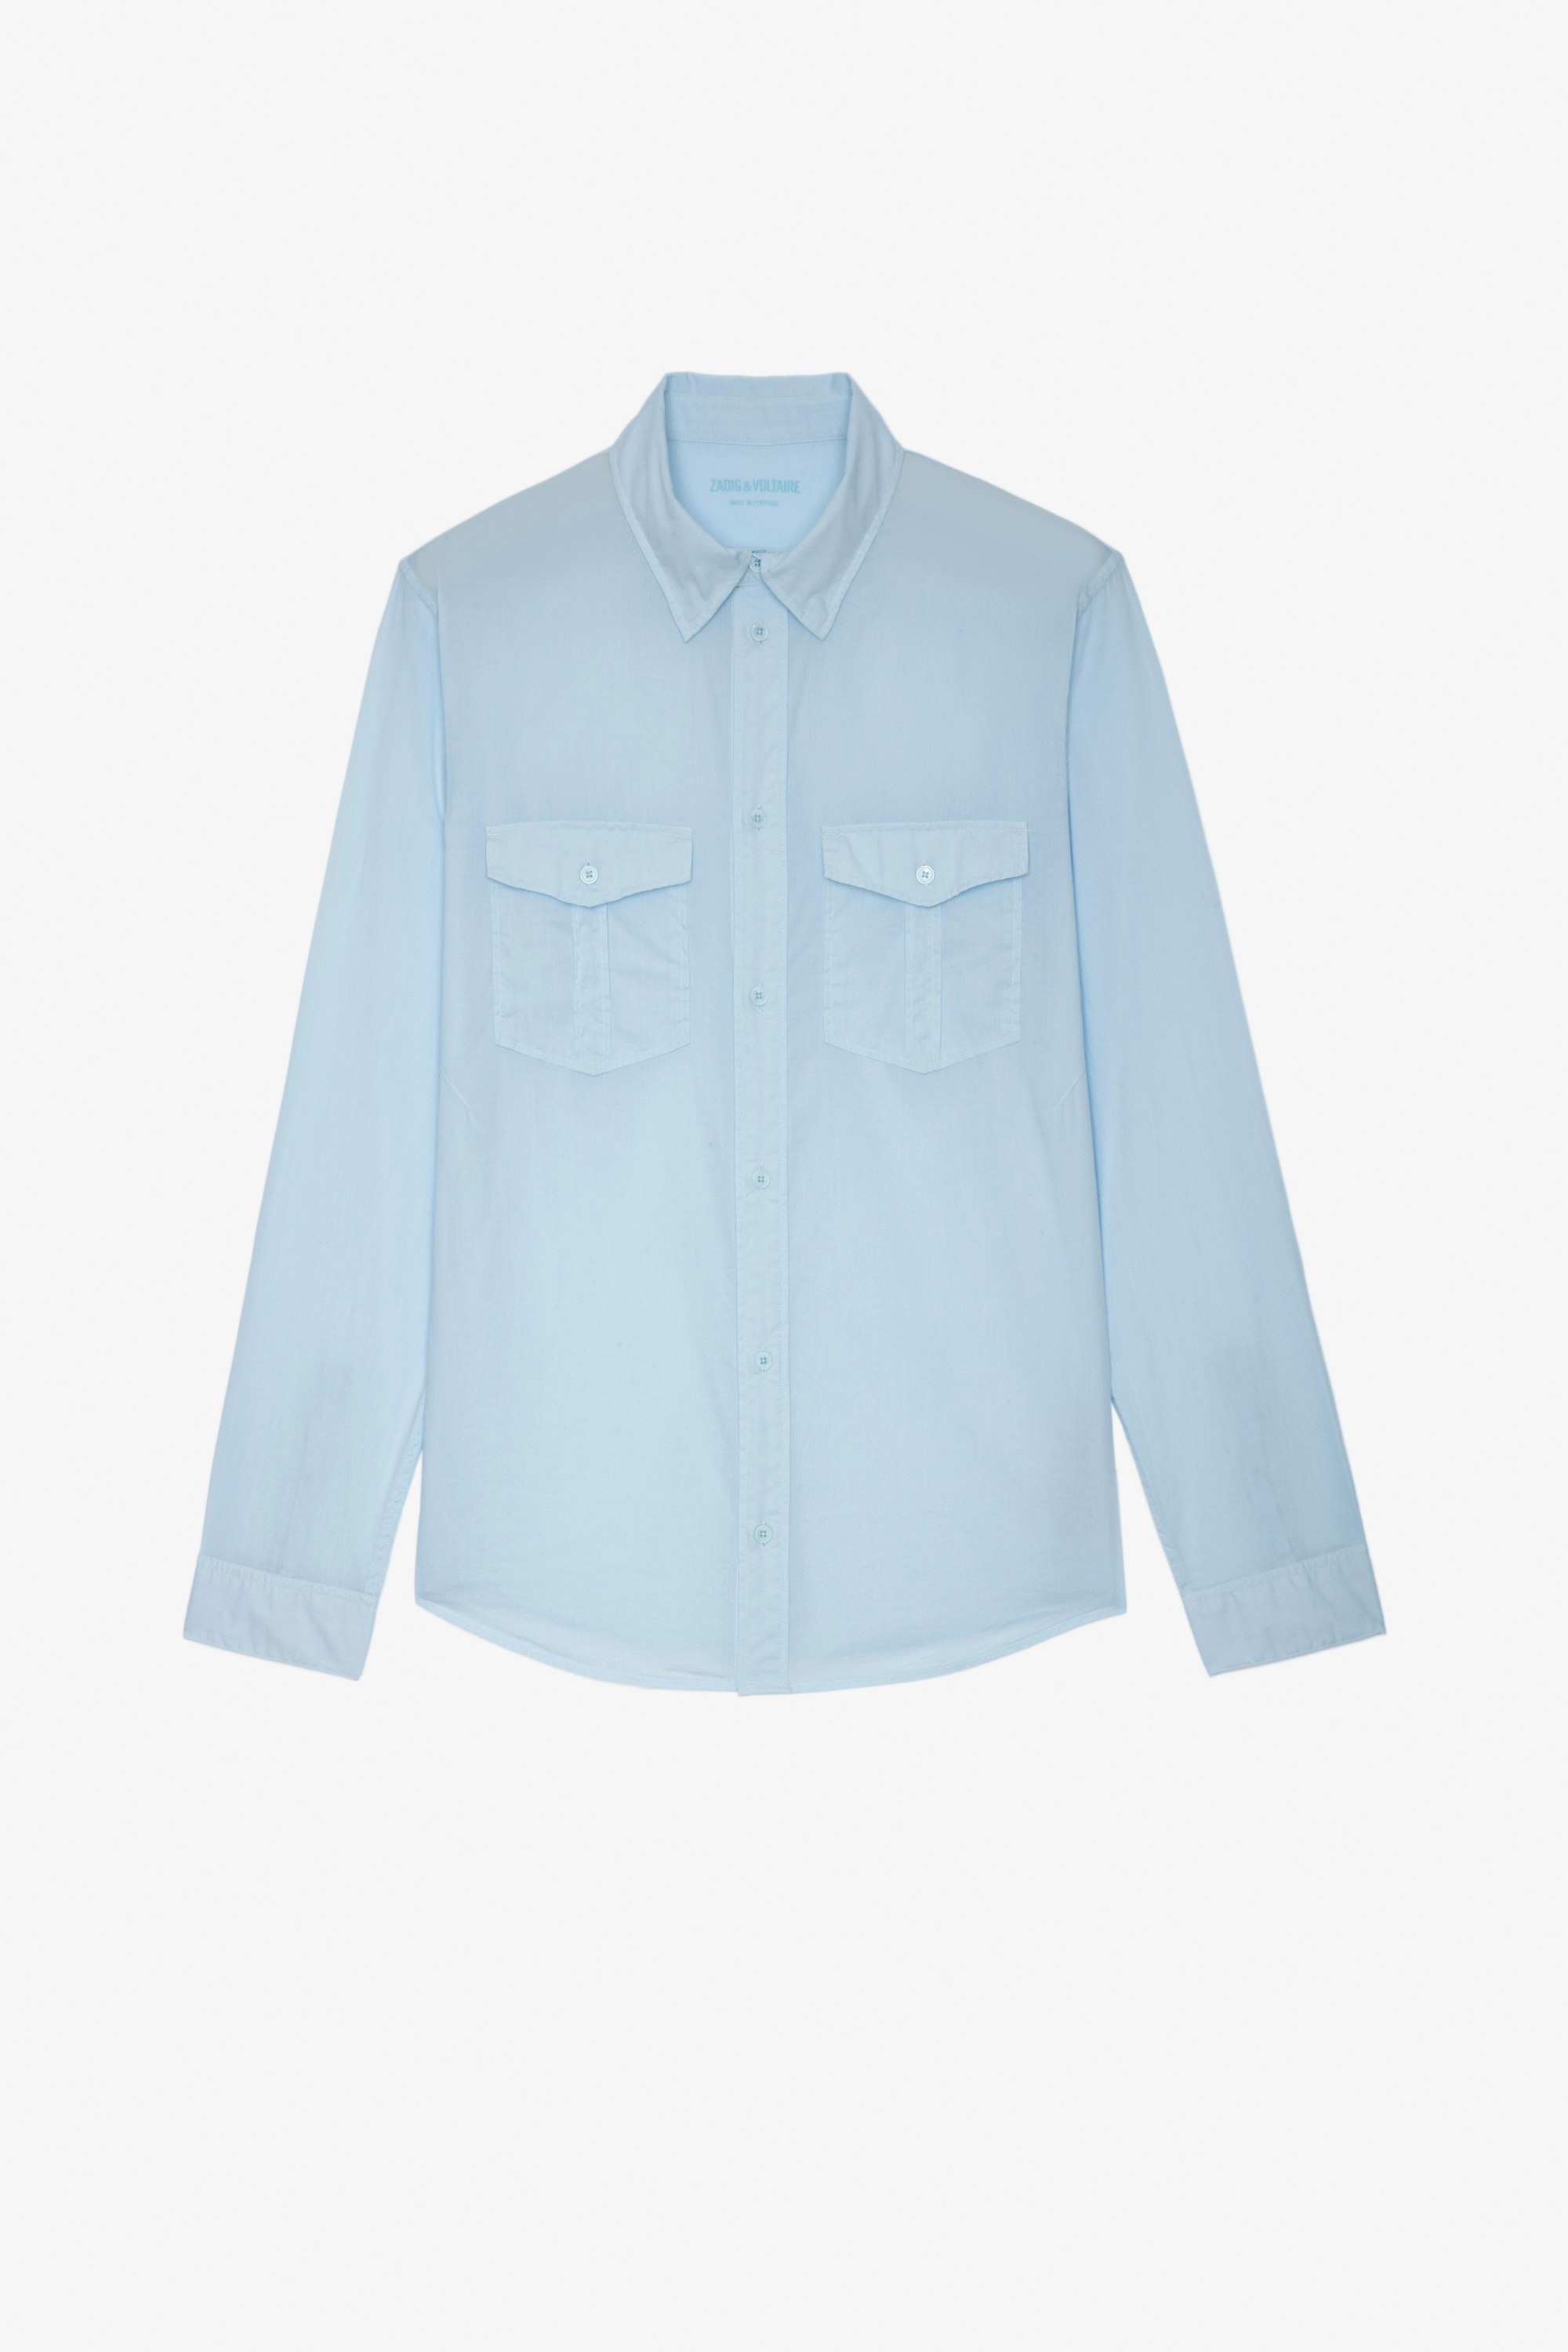 Camisa Thibaut Camisa clásica azul claro de algodón para hombre